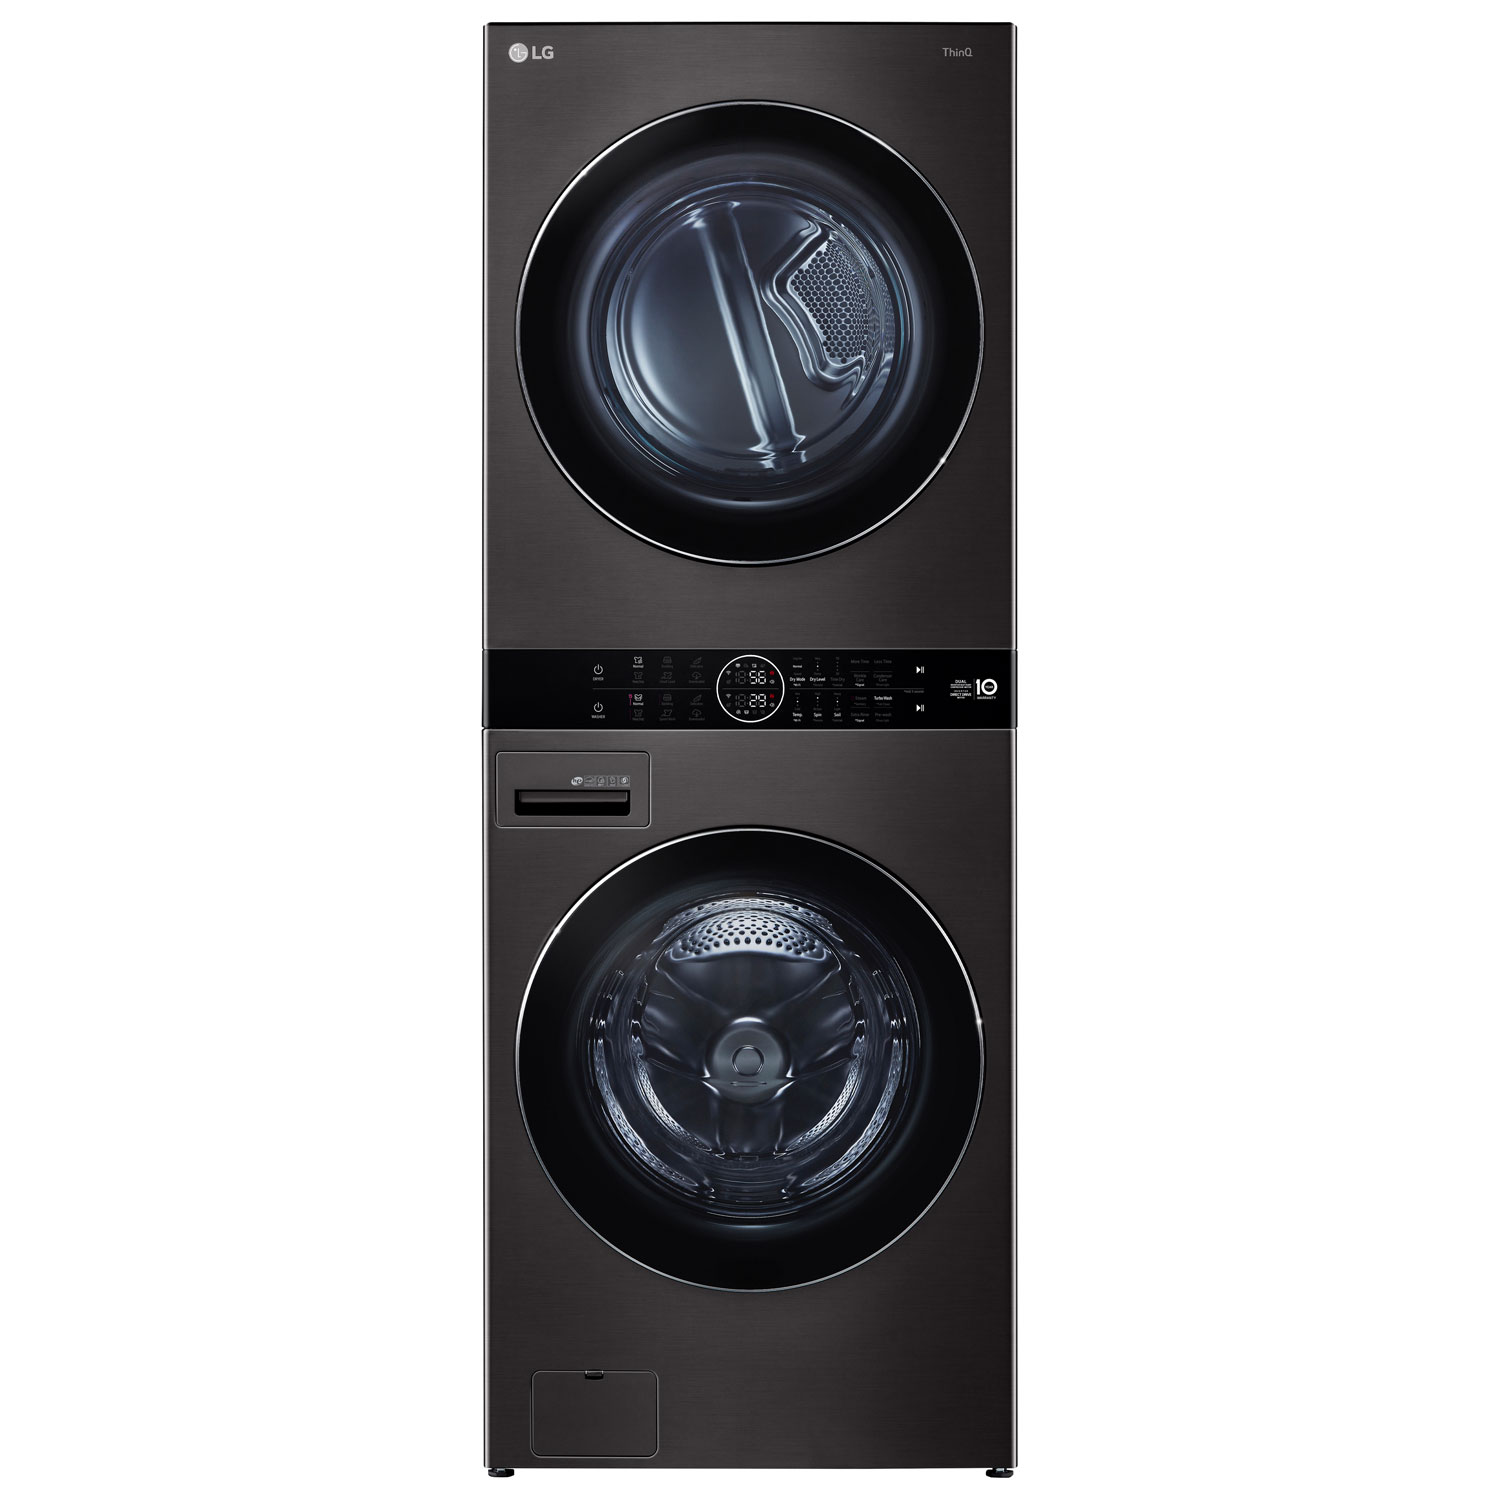 LG WashTower 5.2 Cu. Ft. High Efficiency Washer & Heat Pump Dryer Laundry Centre (WKHC202HBA) - Black Steel